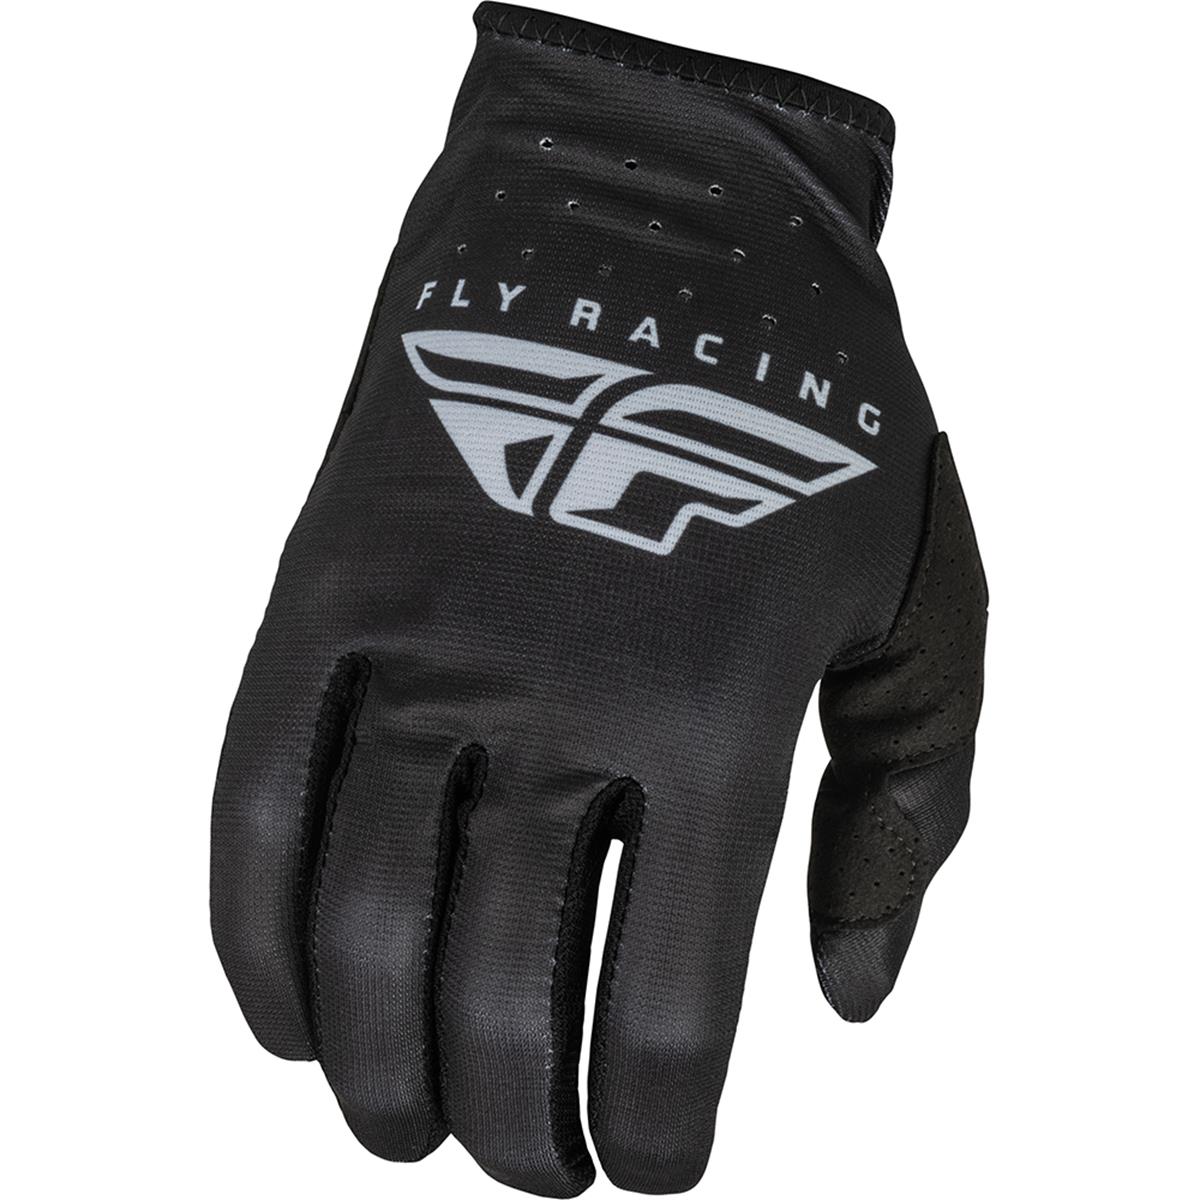 Fly Racing Gloves Lite Black/Gray